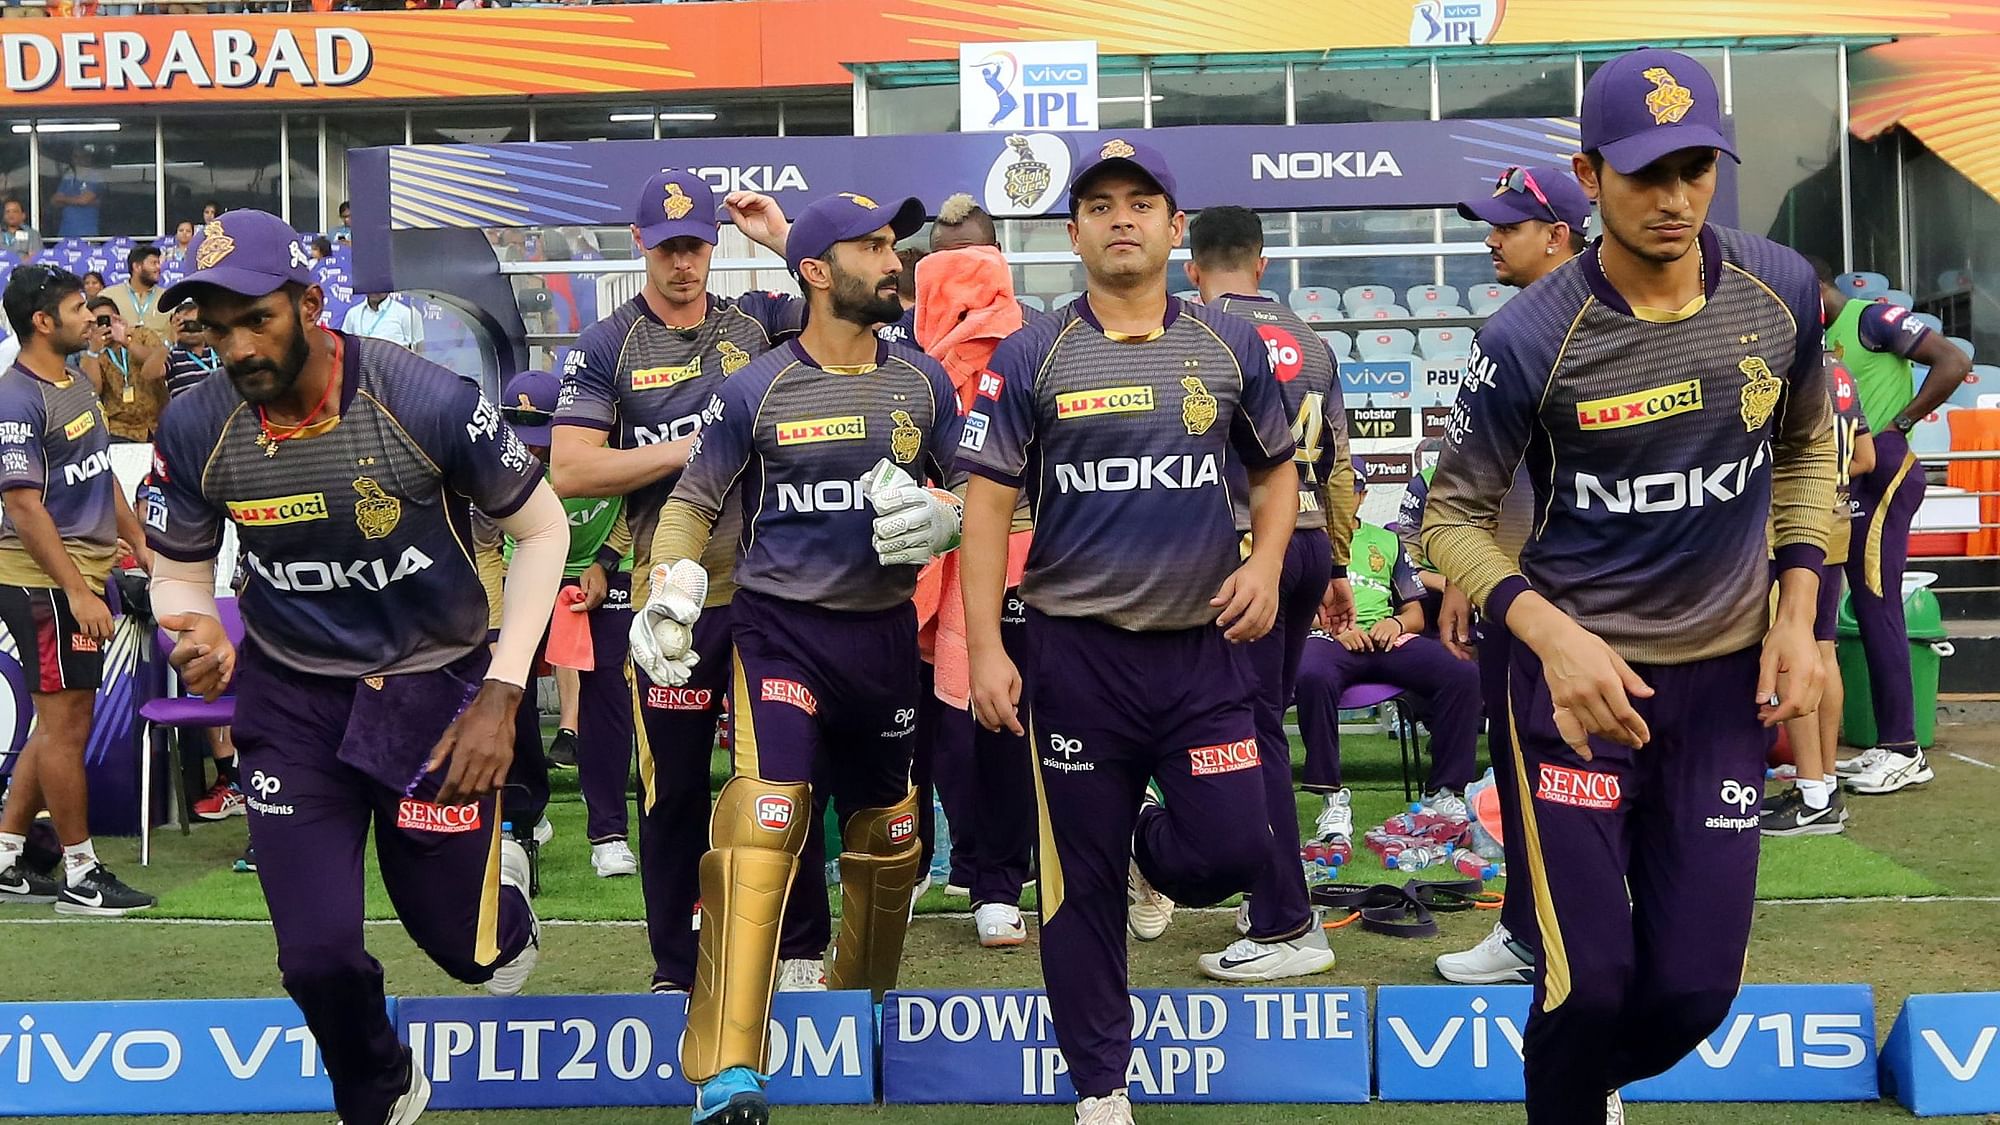 Playing Sunrisers Hyderabad, Kolkata Knight Riders lost by 9 wickets.